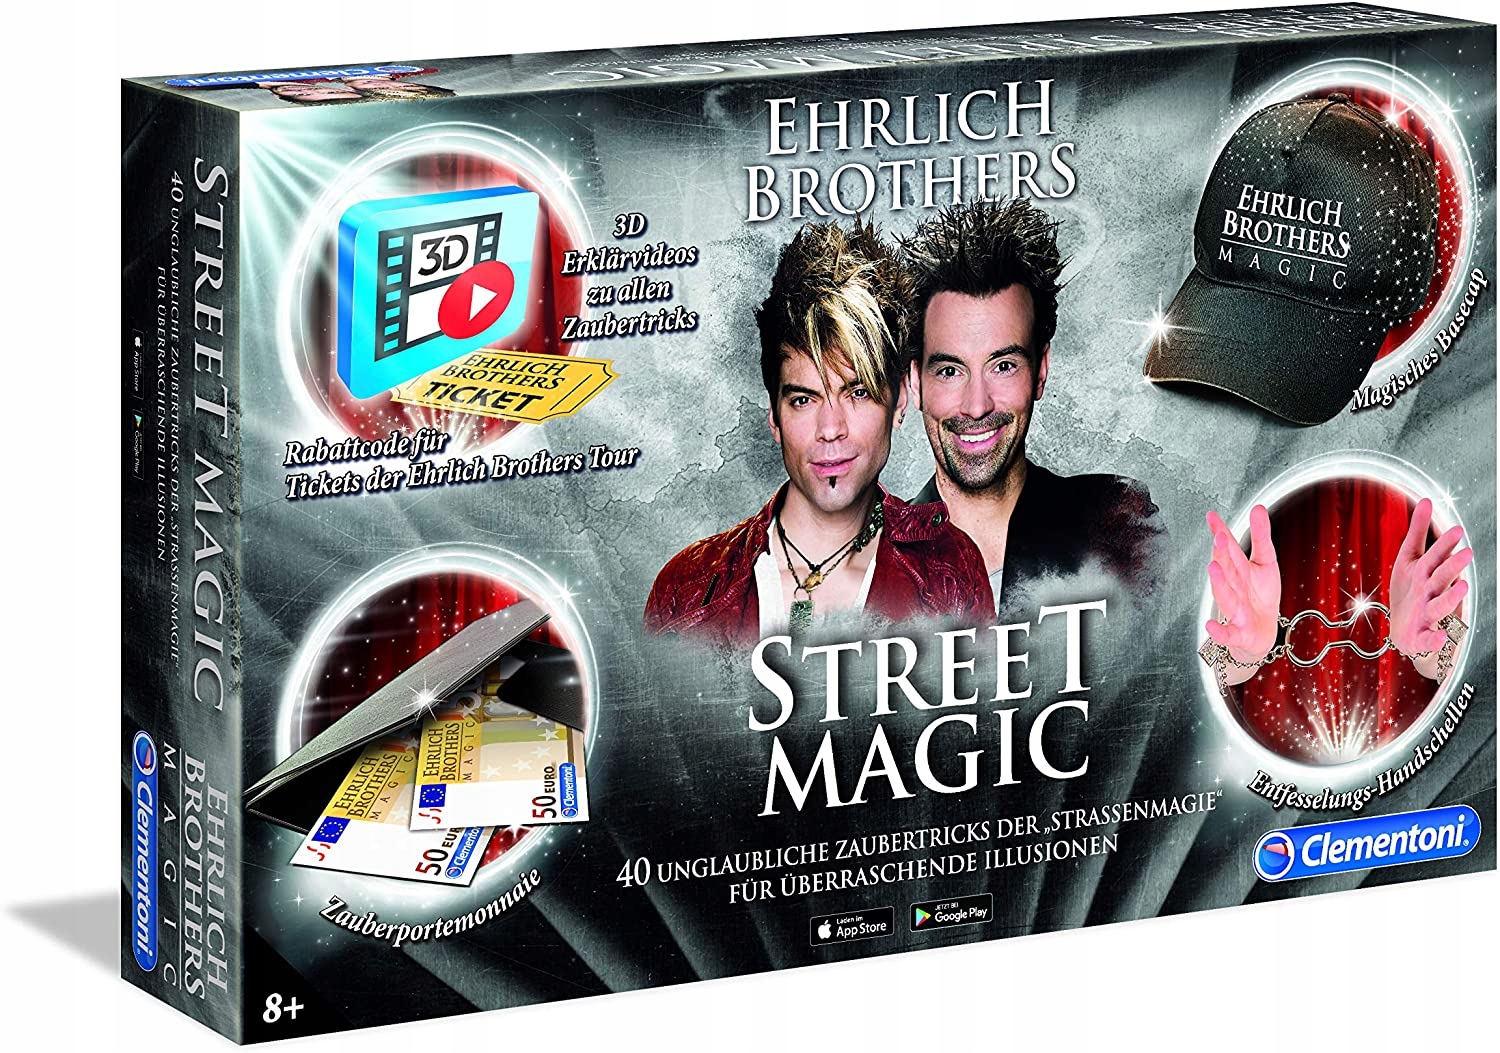 Мейджик отзывы. Magic brothers игра. Ehrlich brothers фокусы.